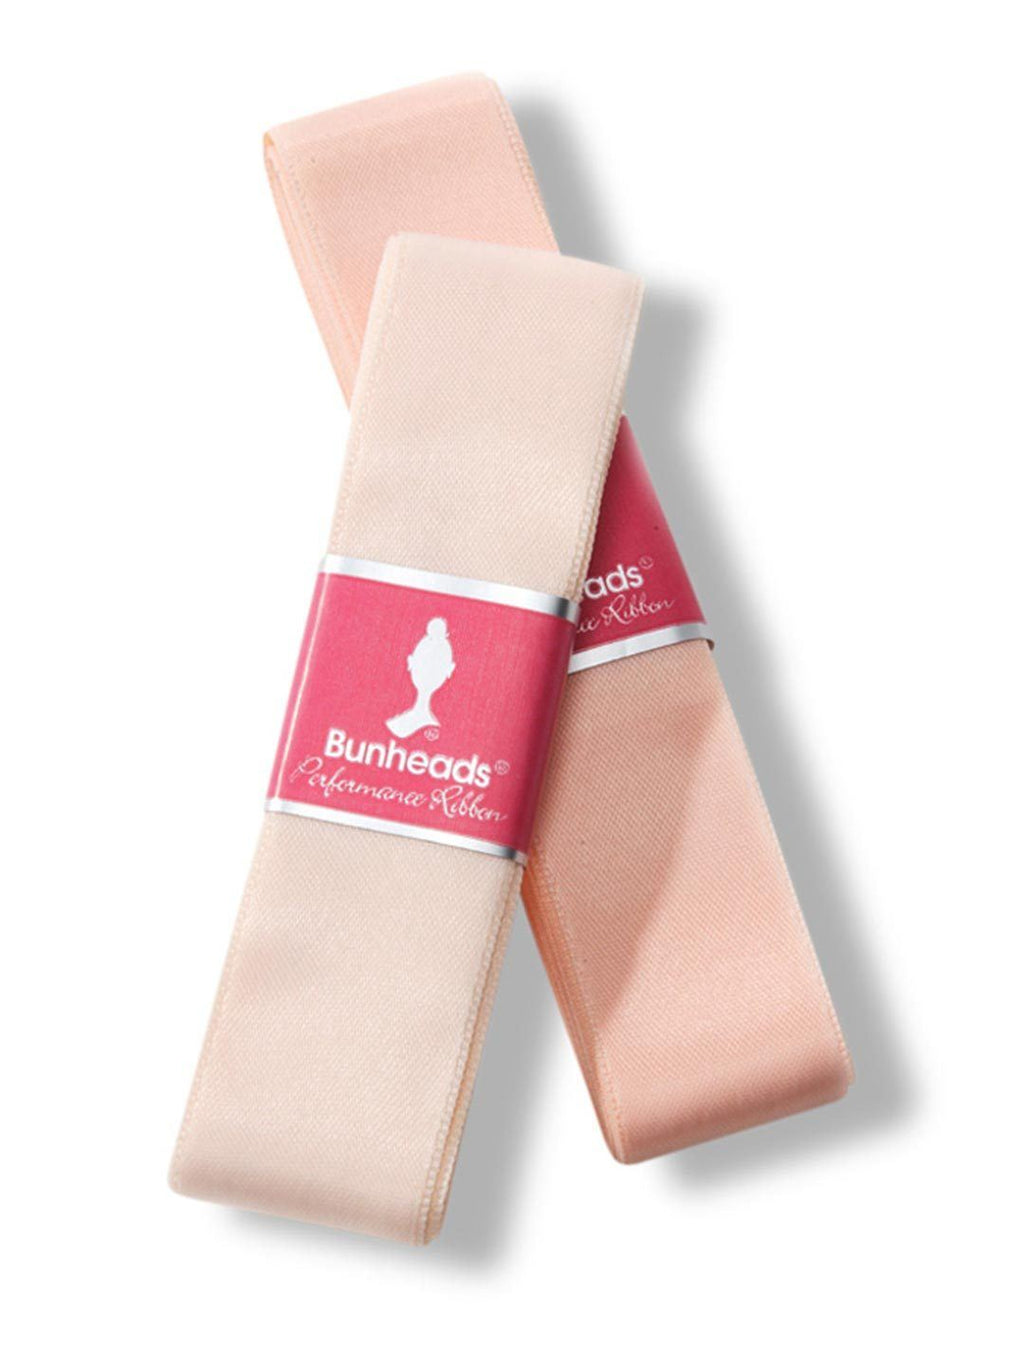 Bunheads Women's Packaged Performance Ribbon (6 Pack)